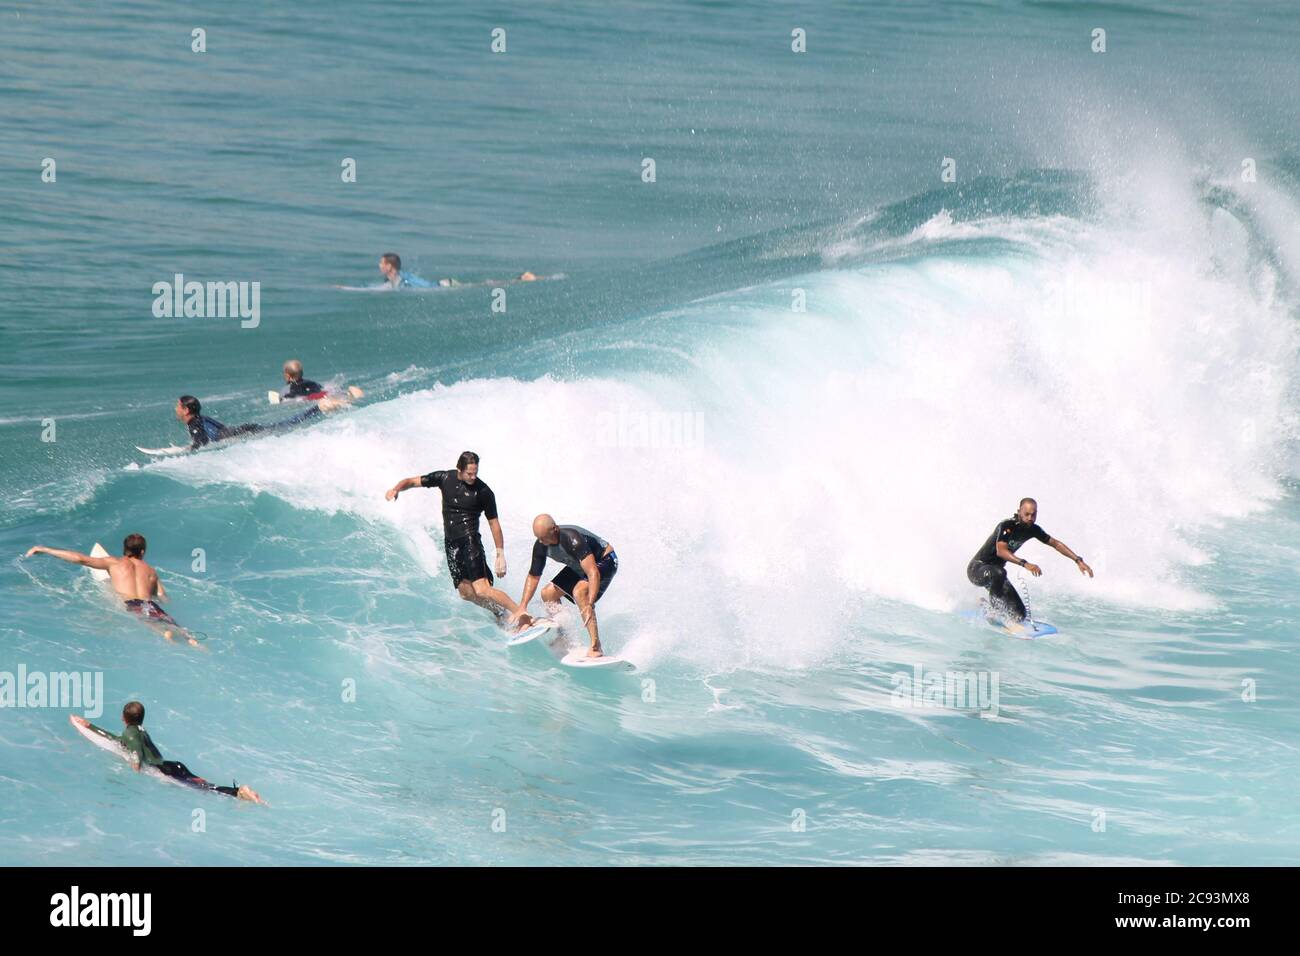 MAROUBRA, AUSTRALIA - Oct 06, 2015: Conflict between 2 surfers on the Australian wave of Maroubra beach Stock Photo